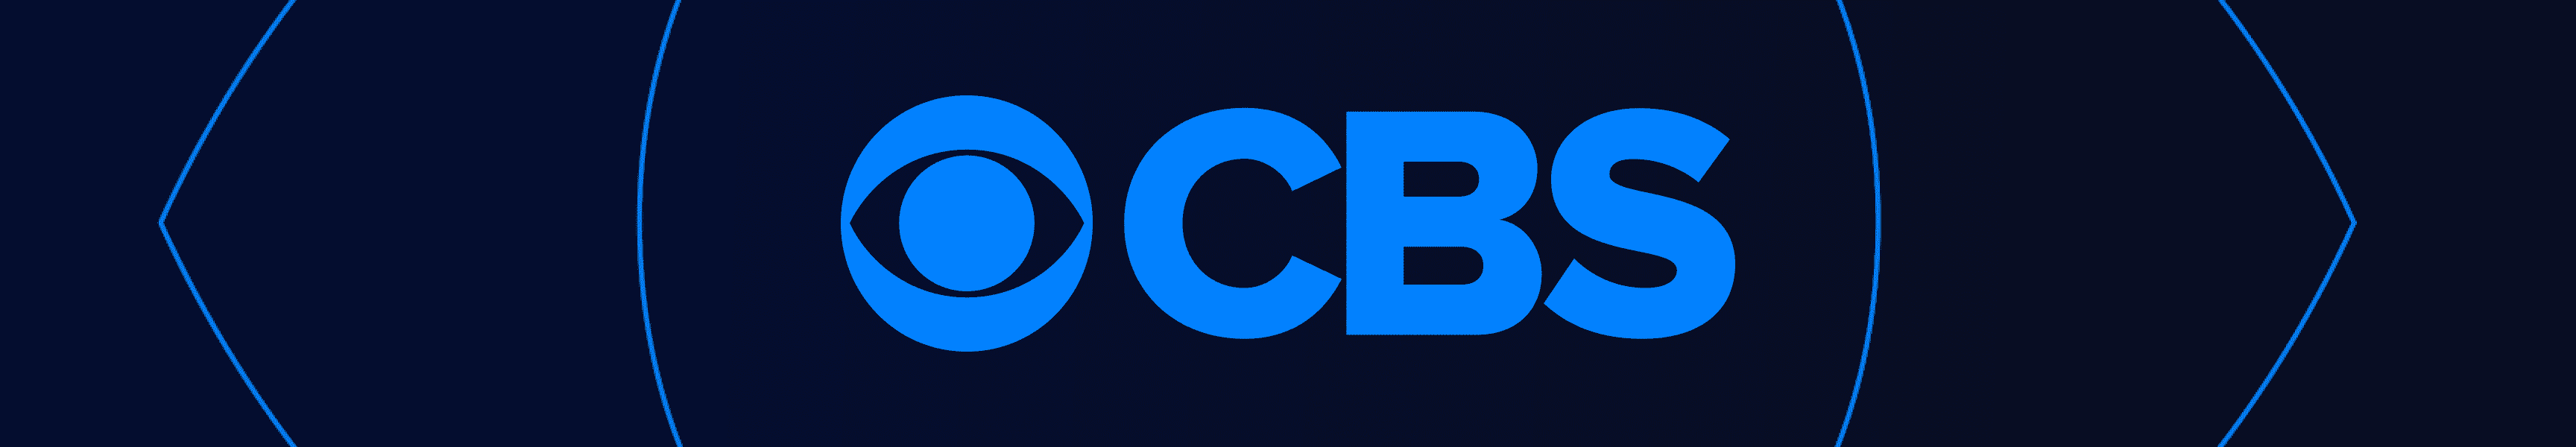 CBS Entertainment Fournitures de bureau